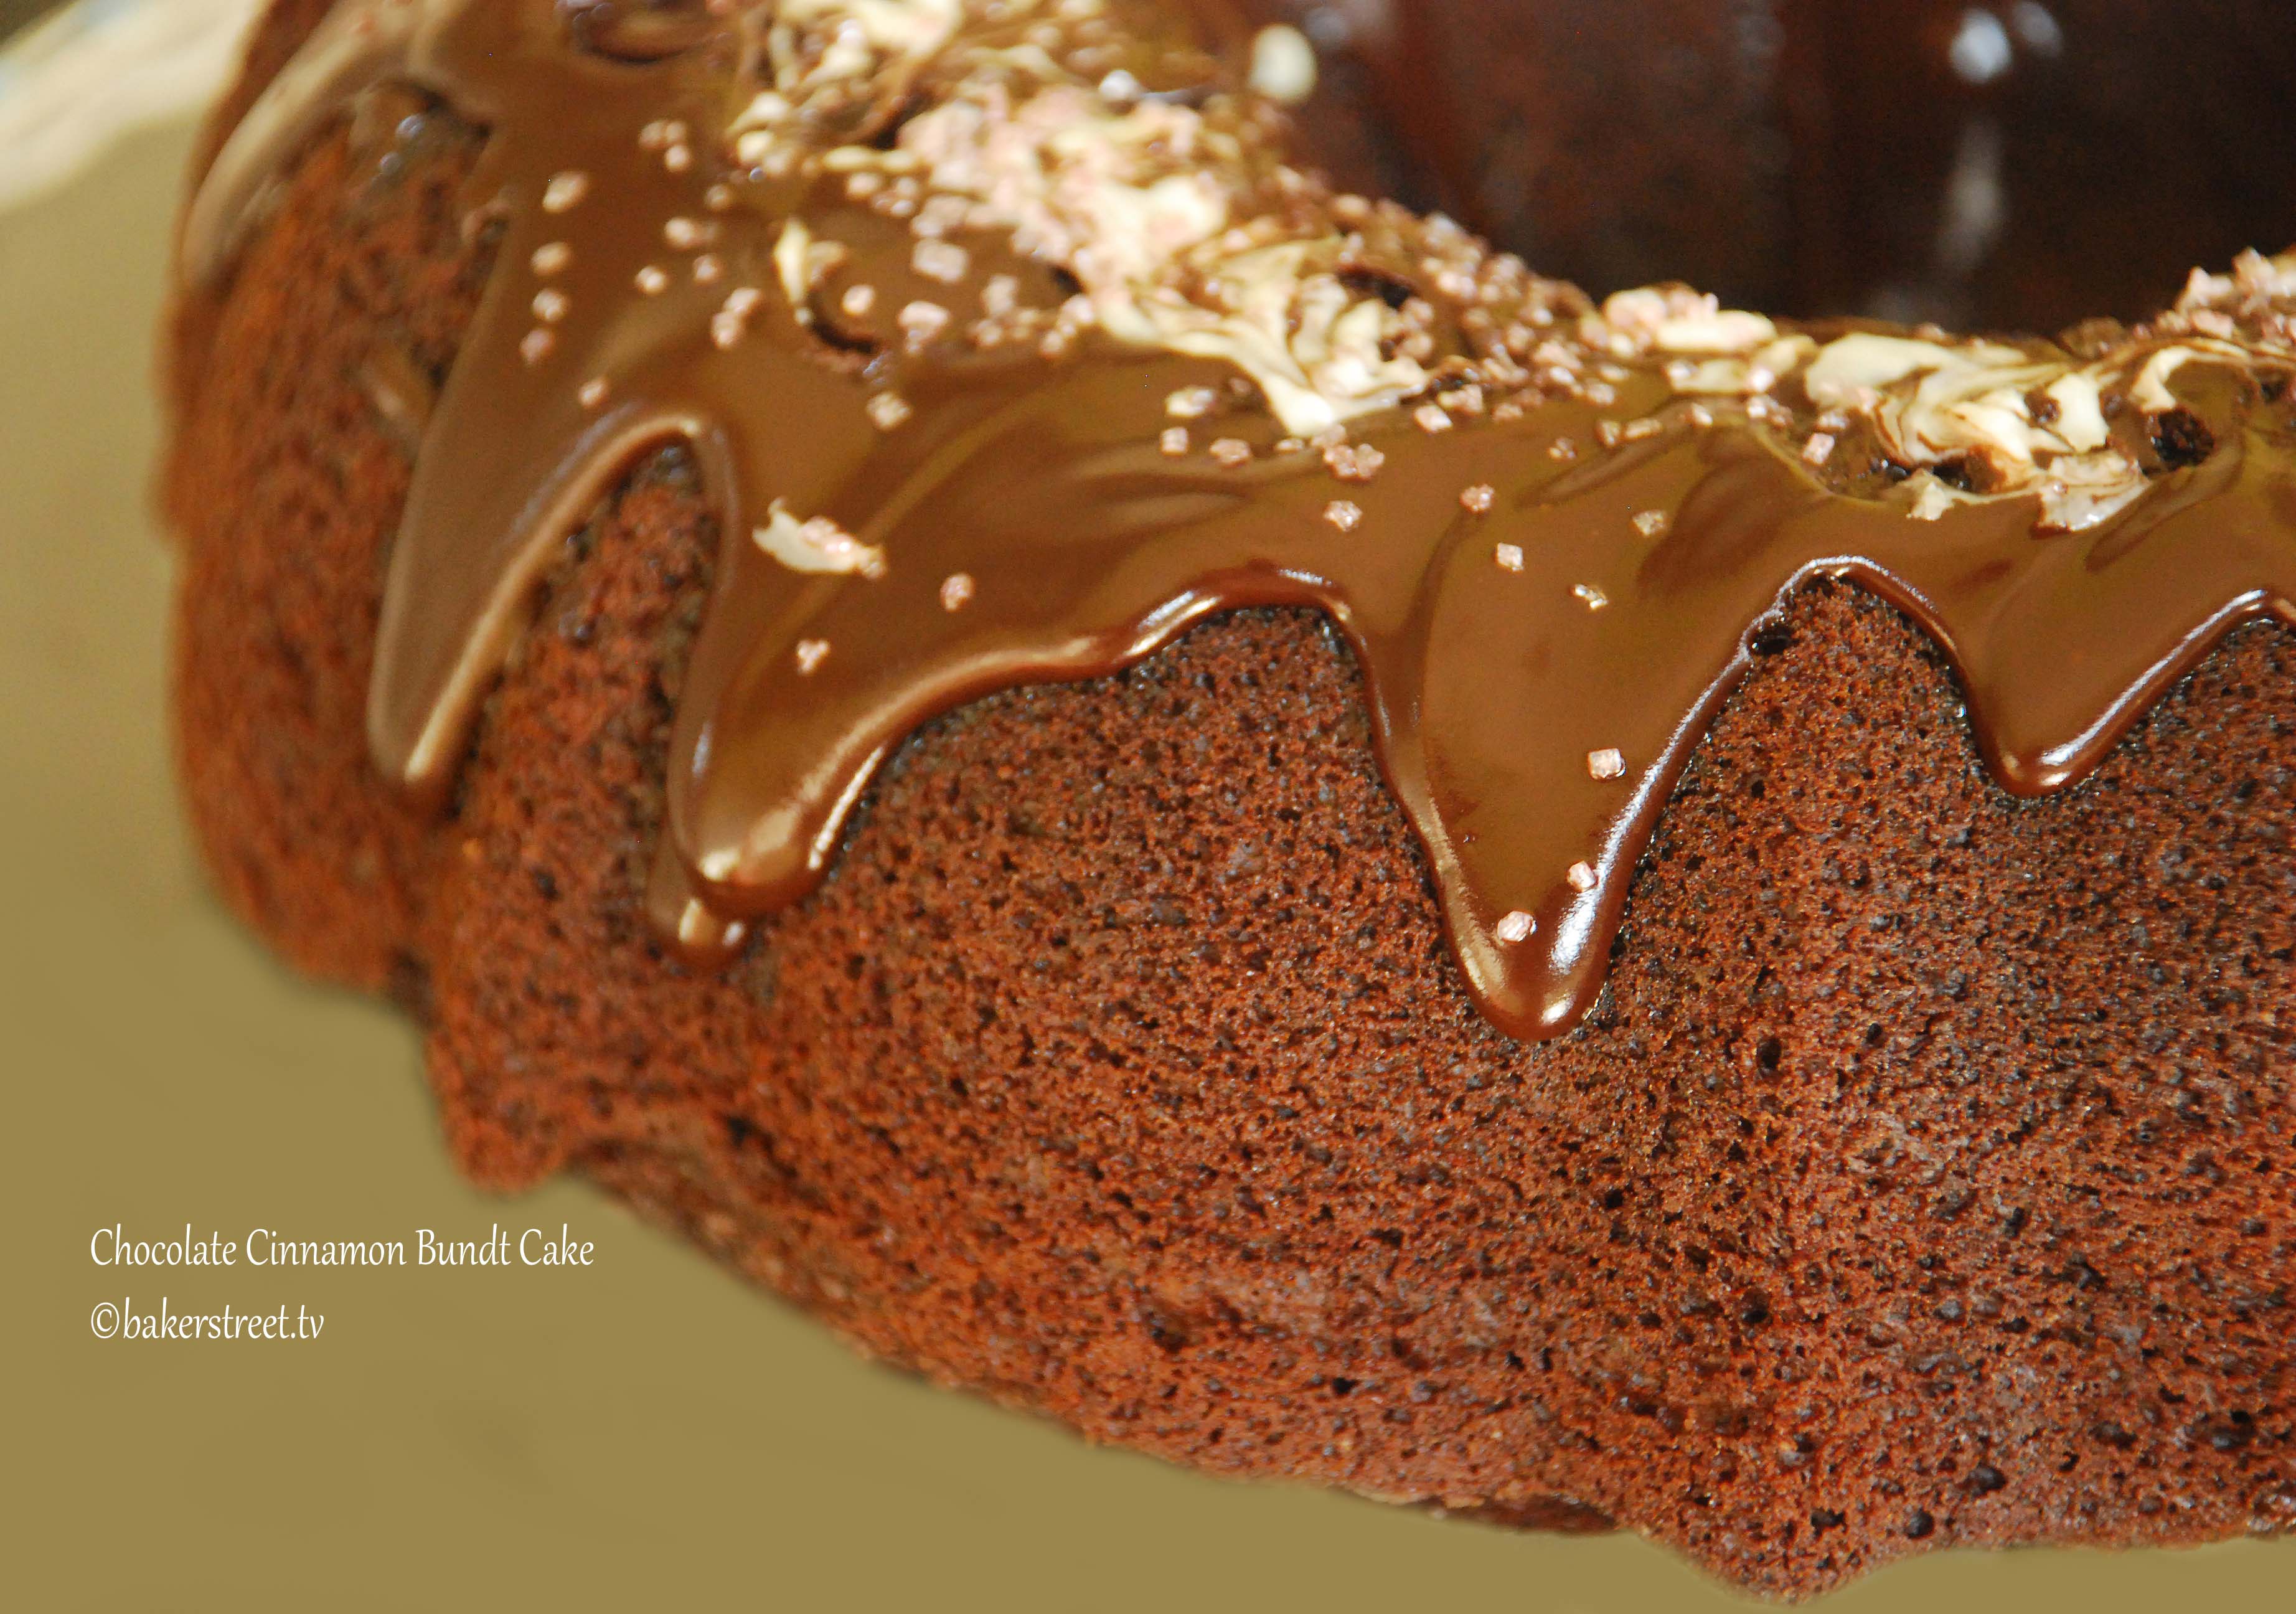 Chocolate Cinnamon Bundt Cake1